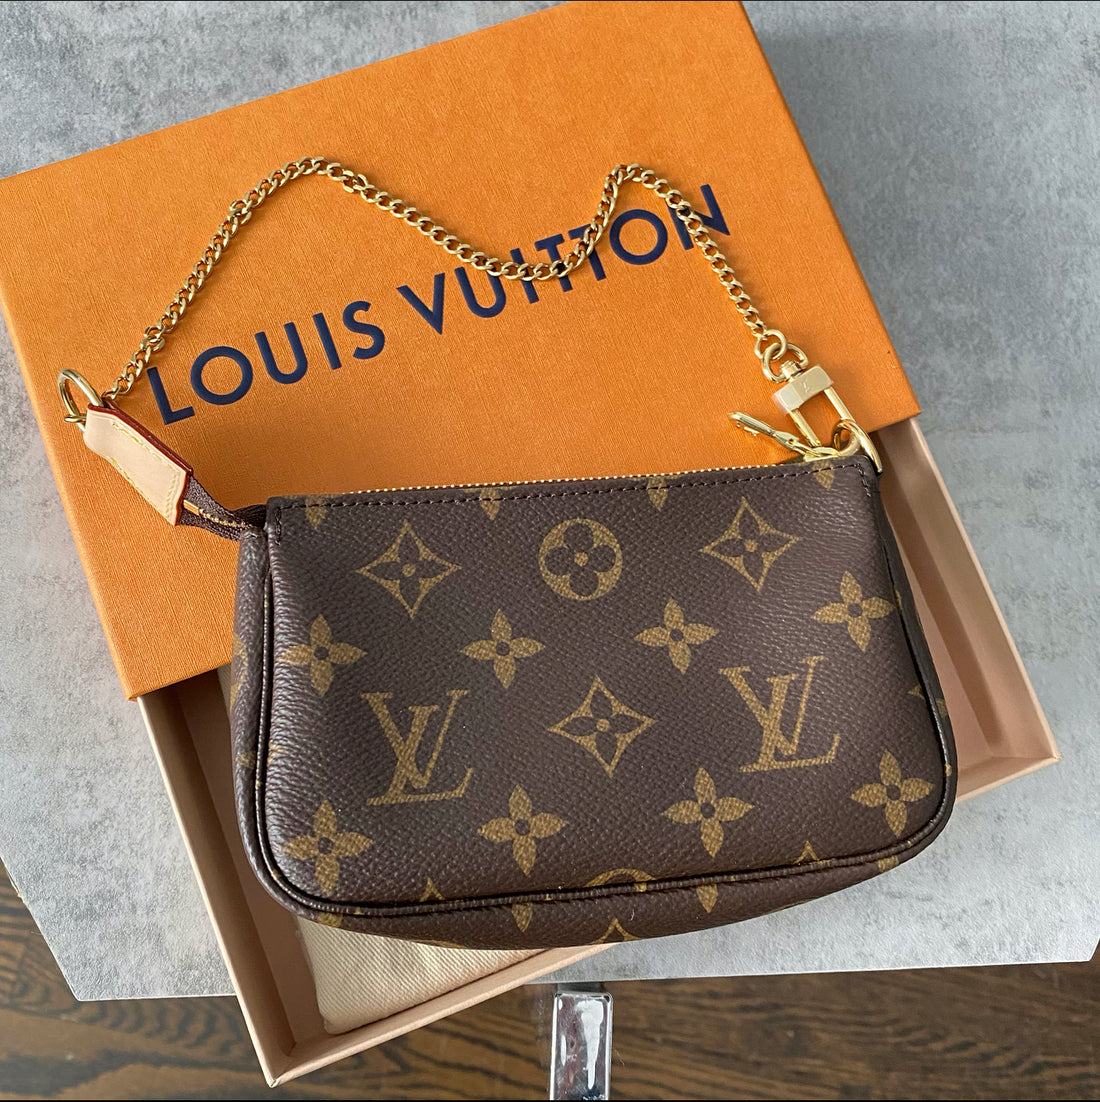 Louis Vuitton Mini Pochette Accessoires – First Impressions and